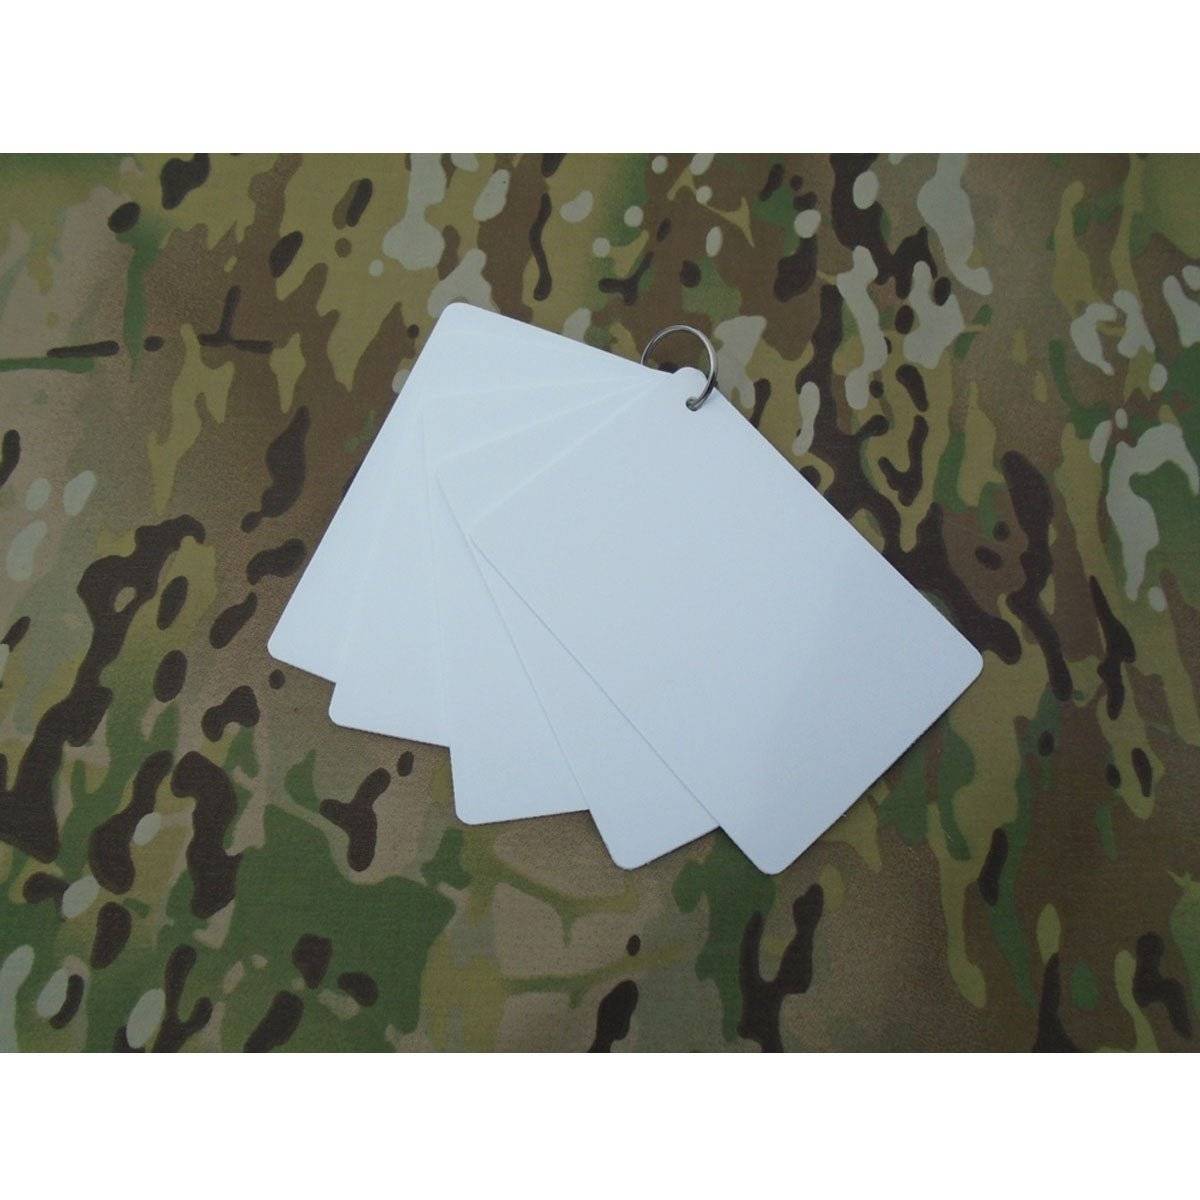 Waterproof A6 Battle Slate Cards - 5 Cards - John Bull Clothing